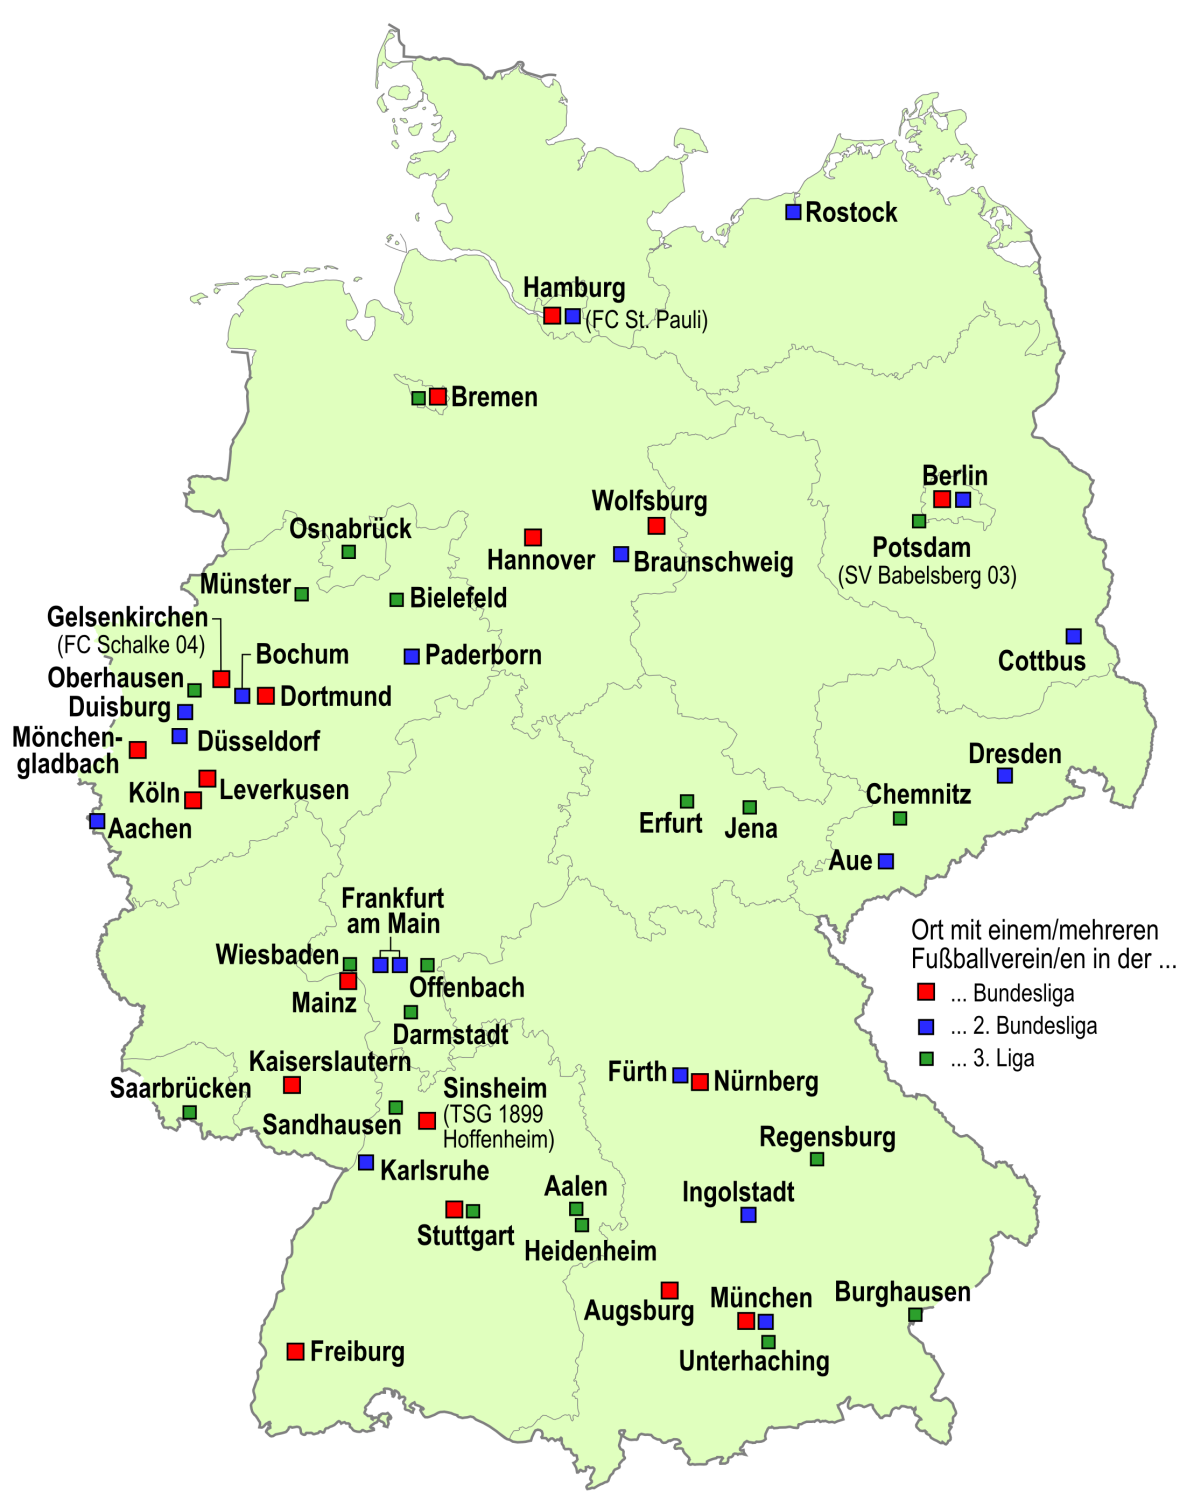 File:Fussball-Bundesliga Mannschaften je Ort 2011-12.png - Wikimedia Commons